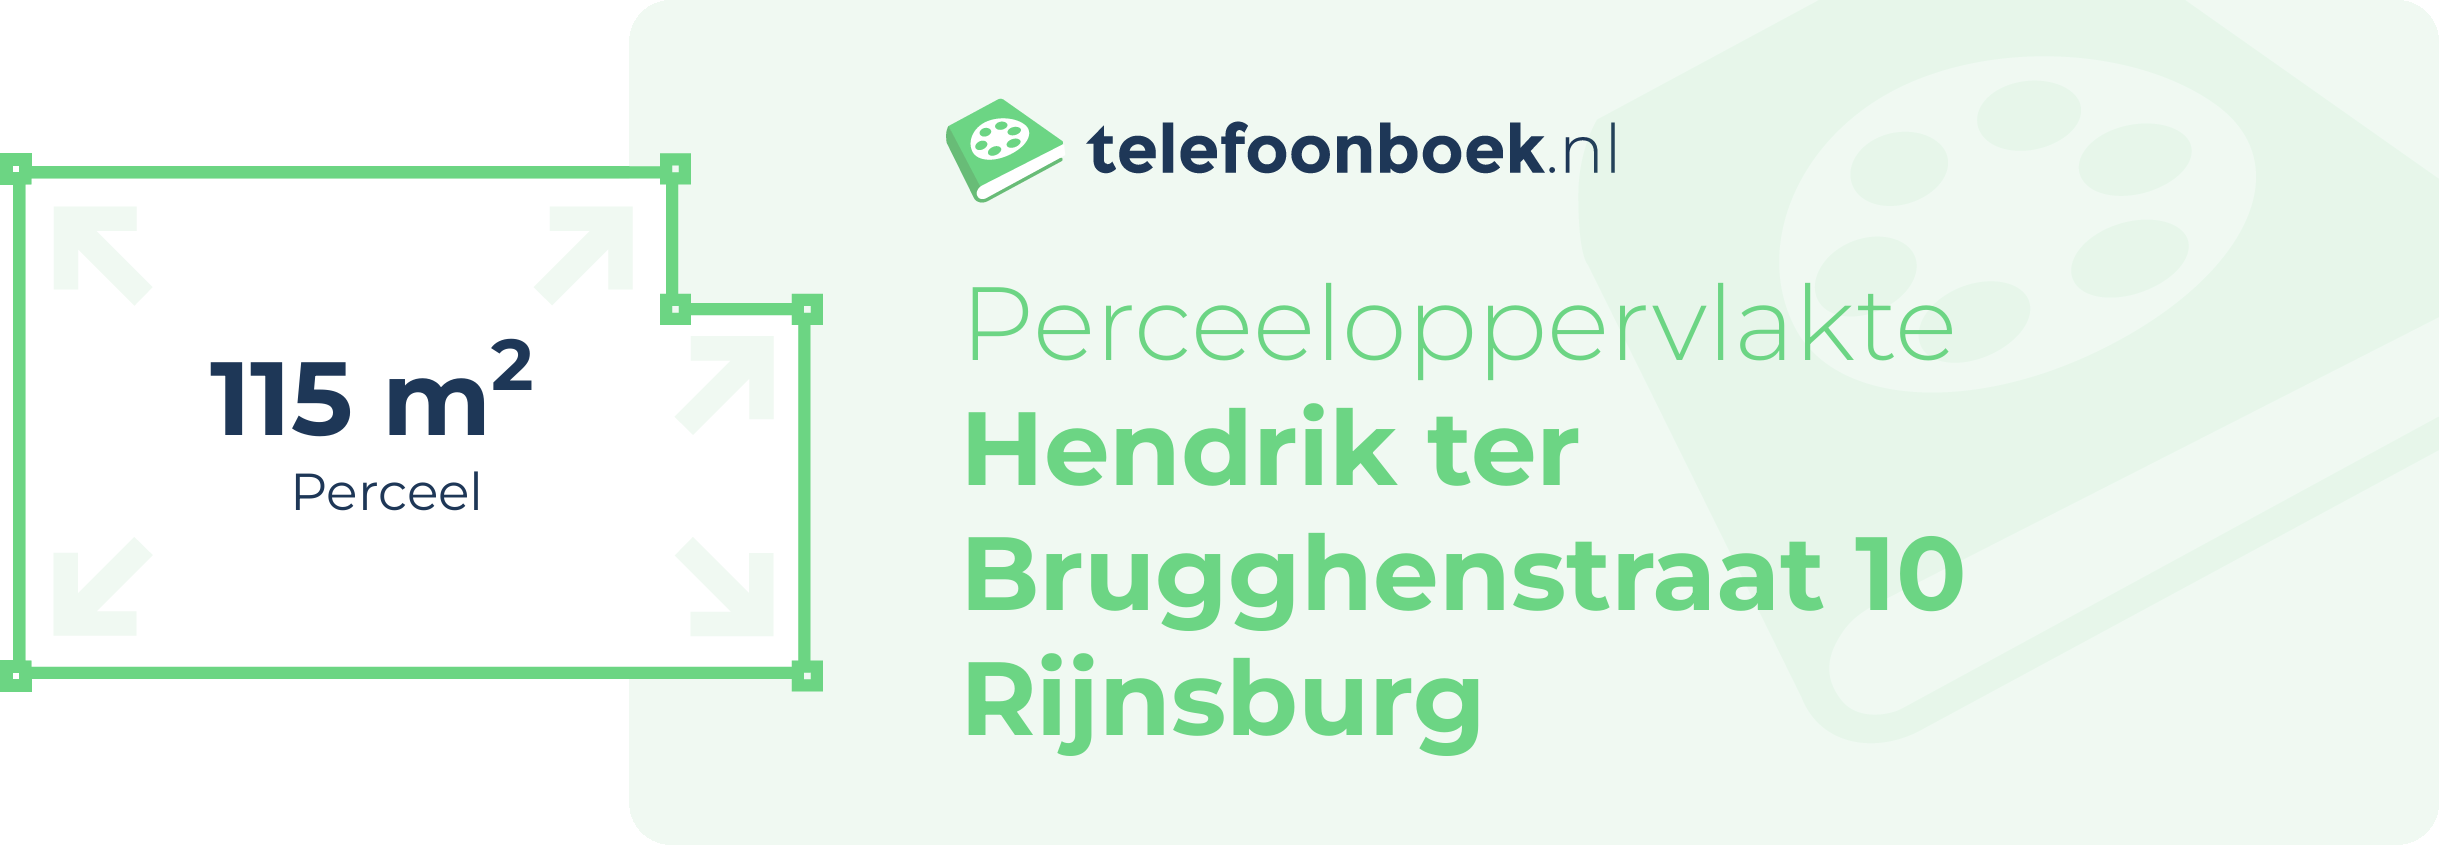 Perceeloppervlakte Hendrik Ter Brugghenstraat 10 Rijnsburg